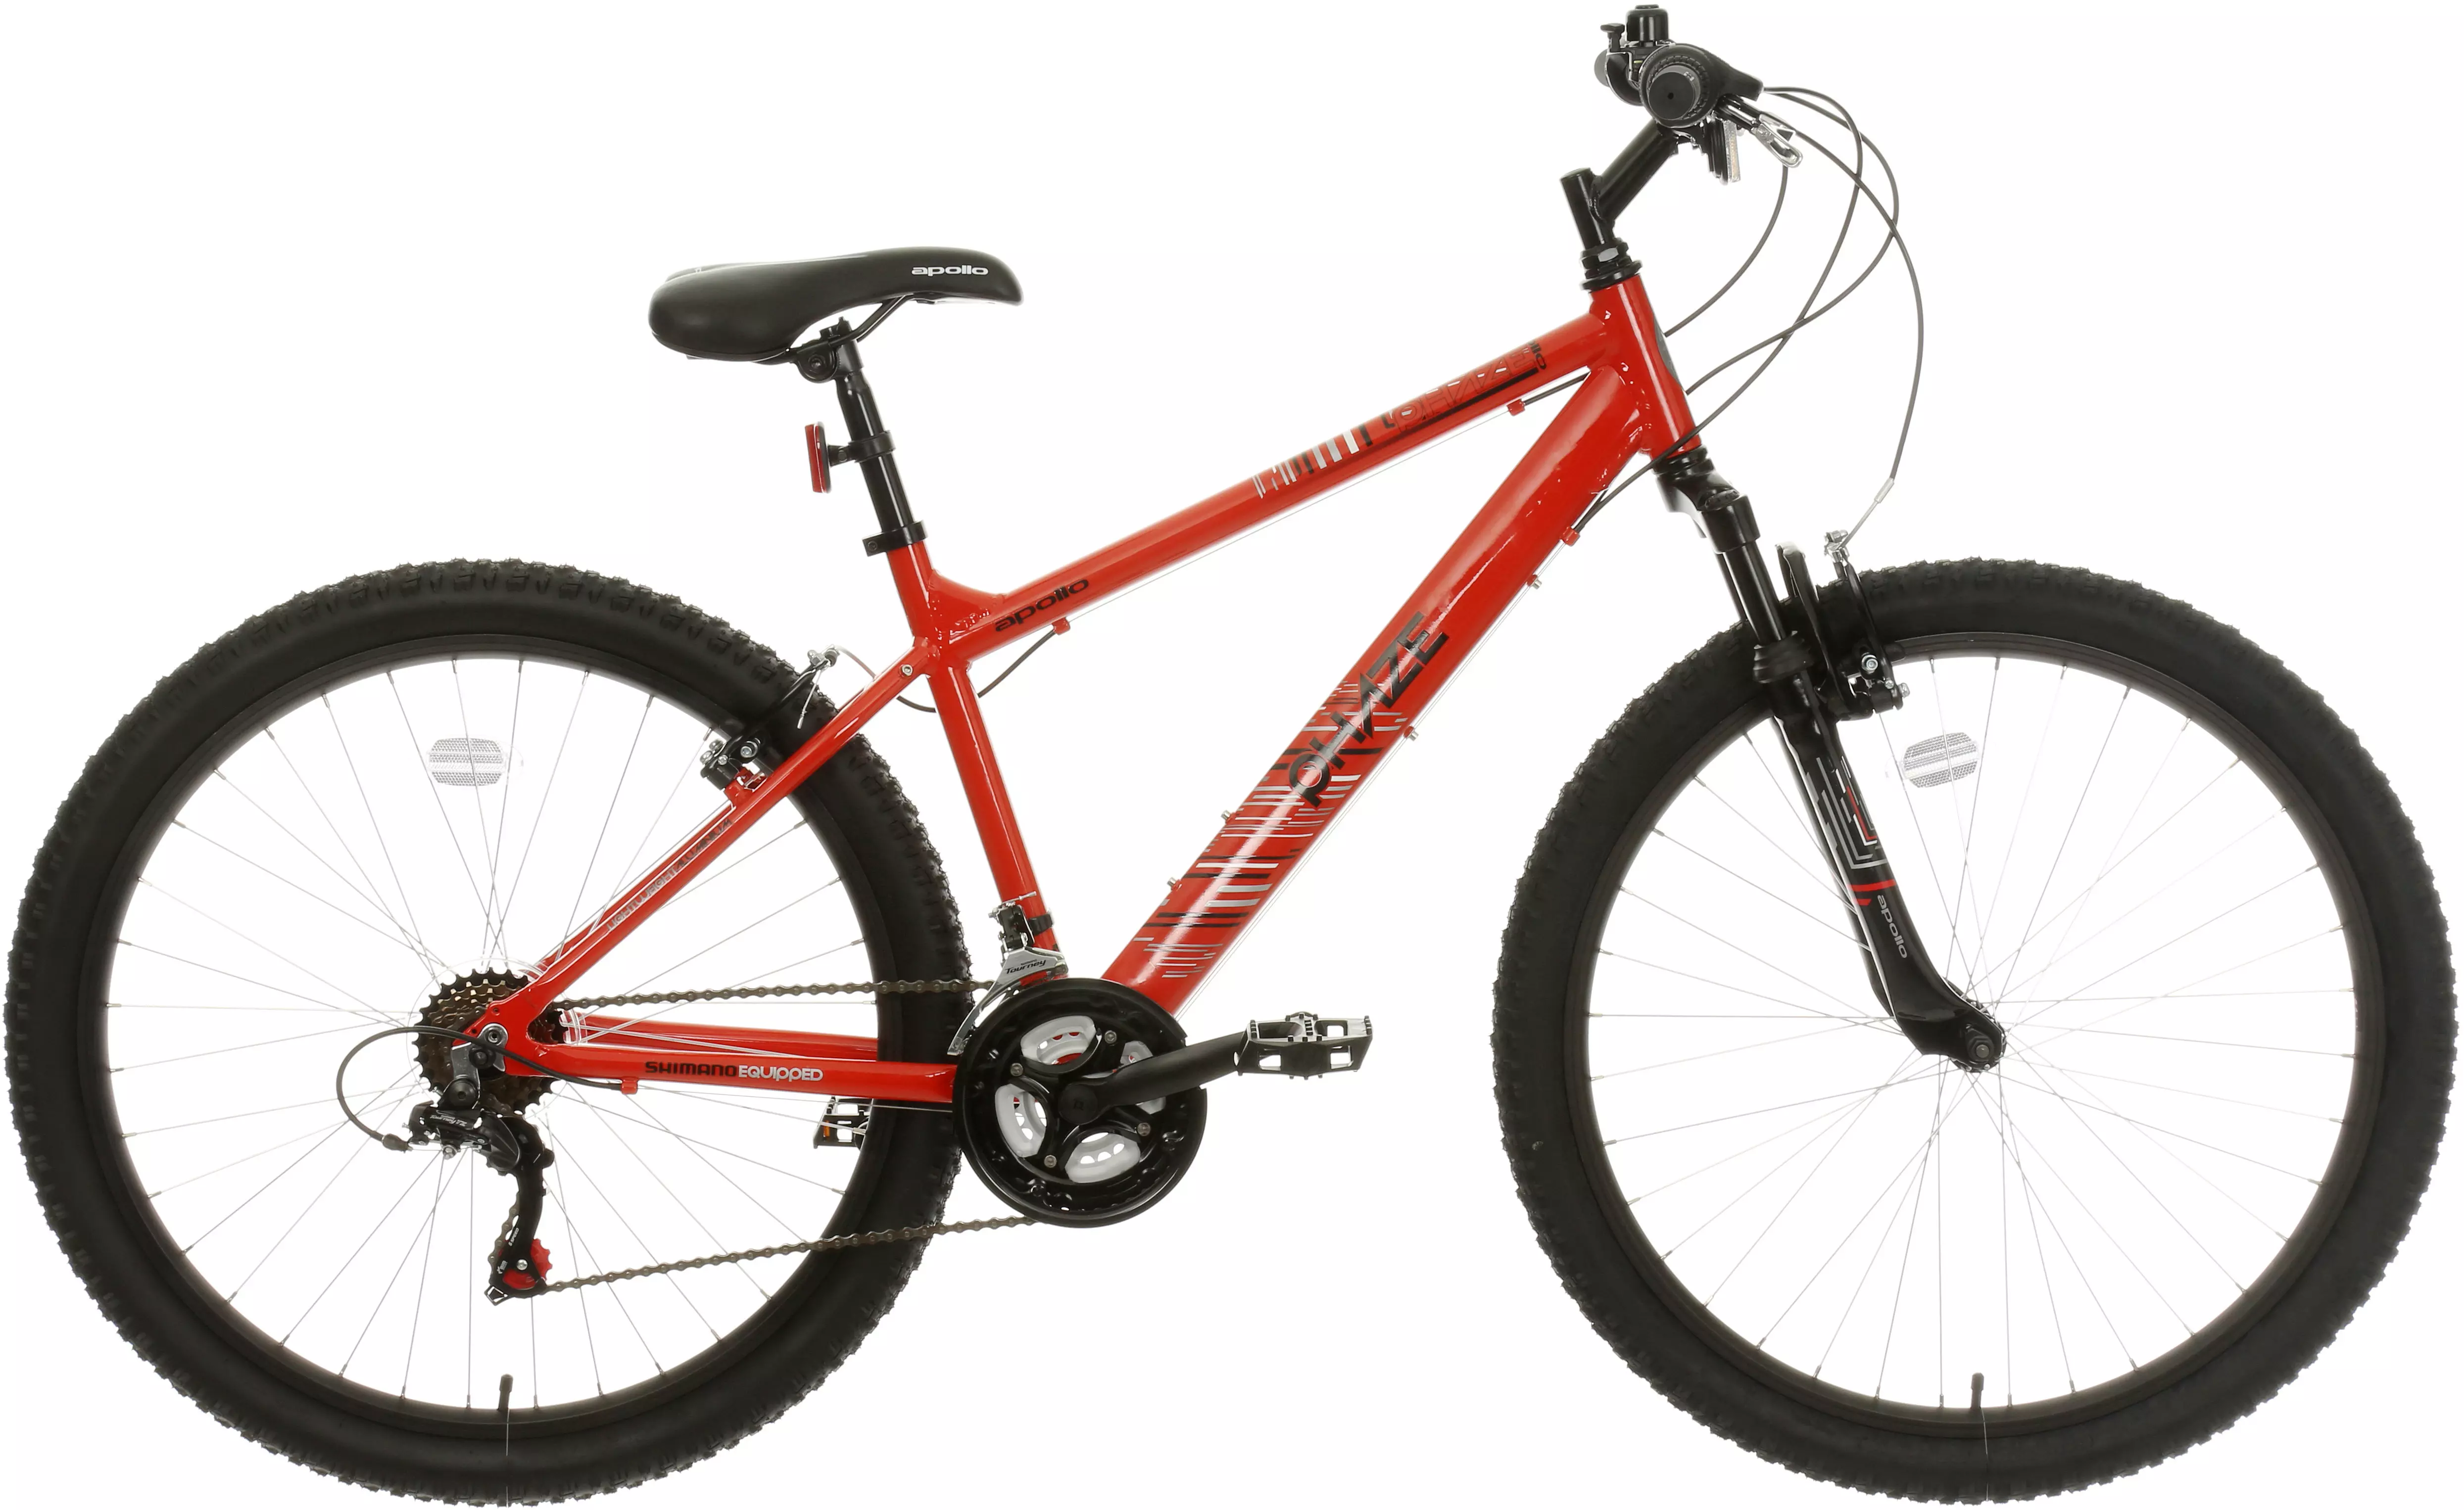 red mountain bike